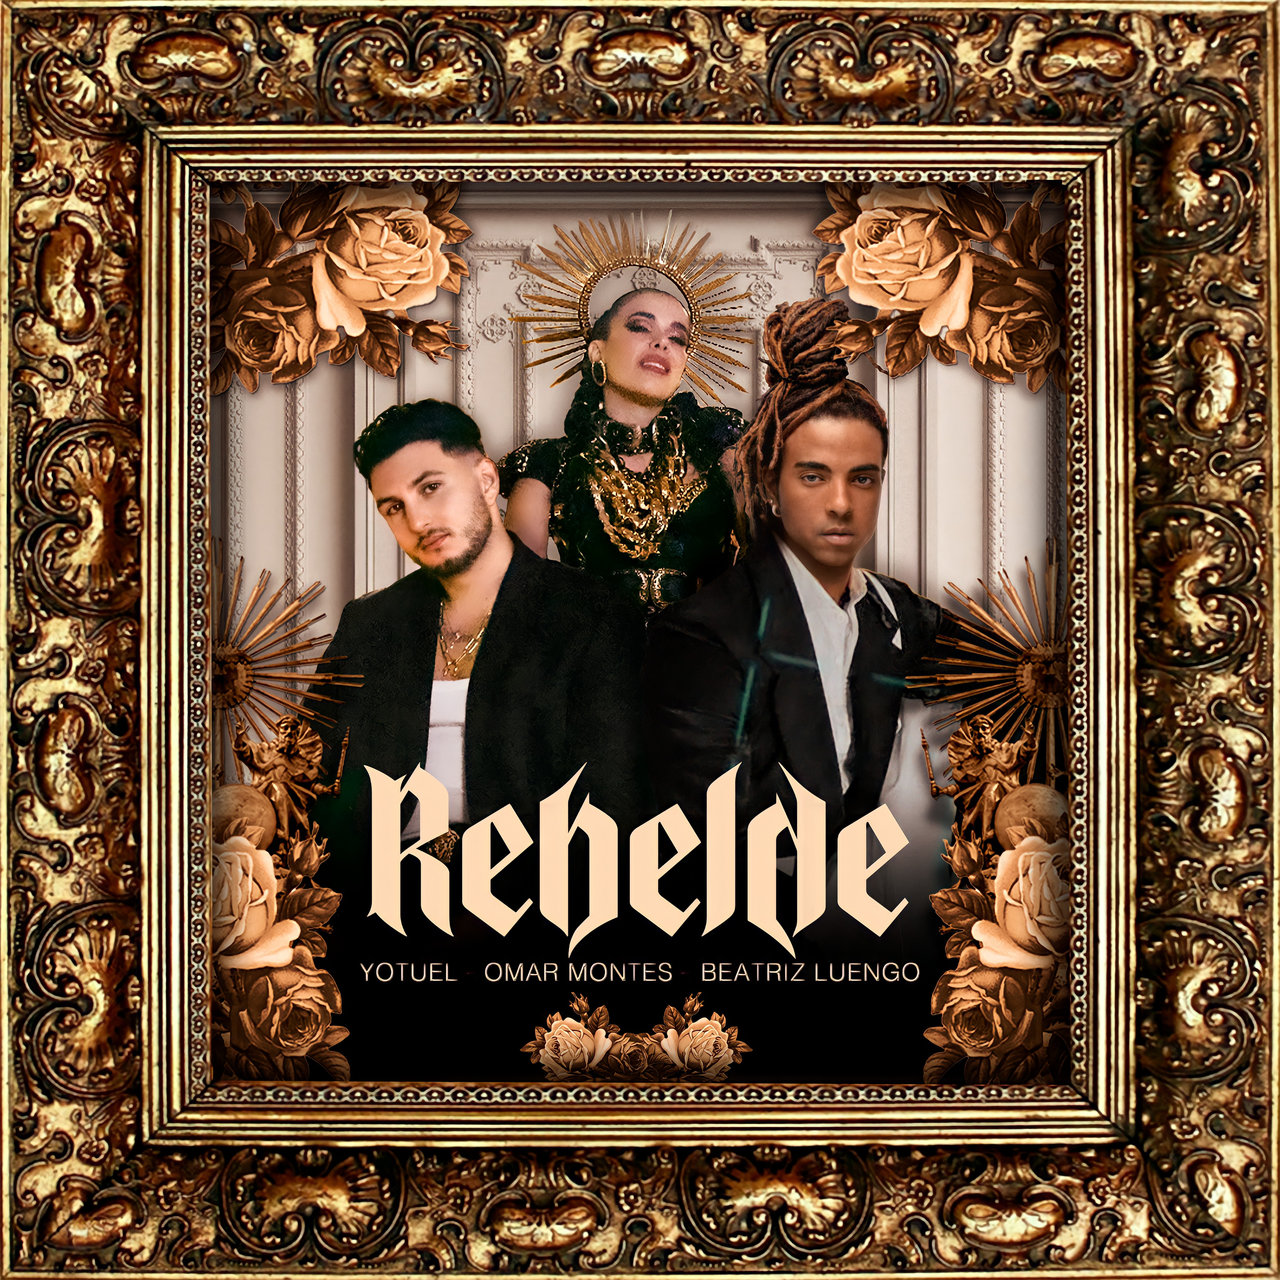 Yotuel, Omar Montes, & Beatriz Luengo Rebelde cover artwork